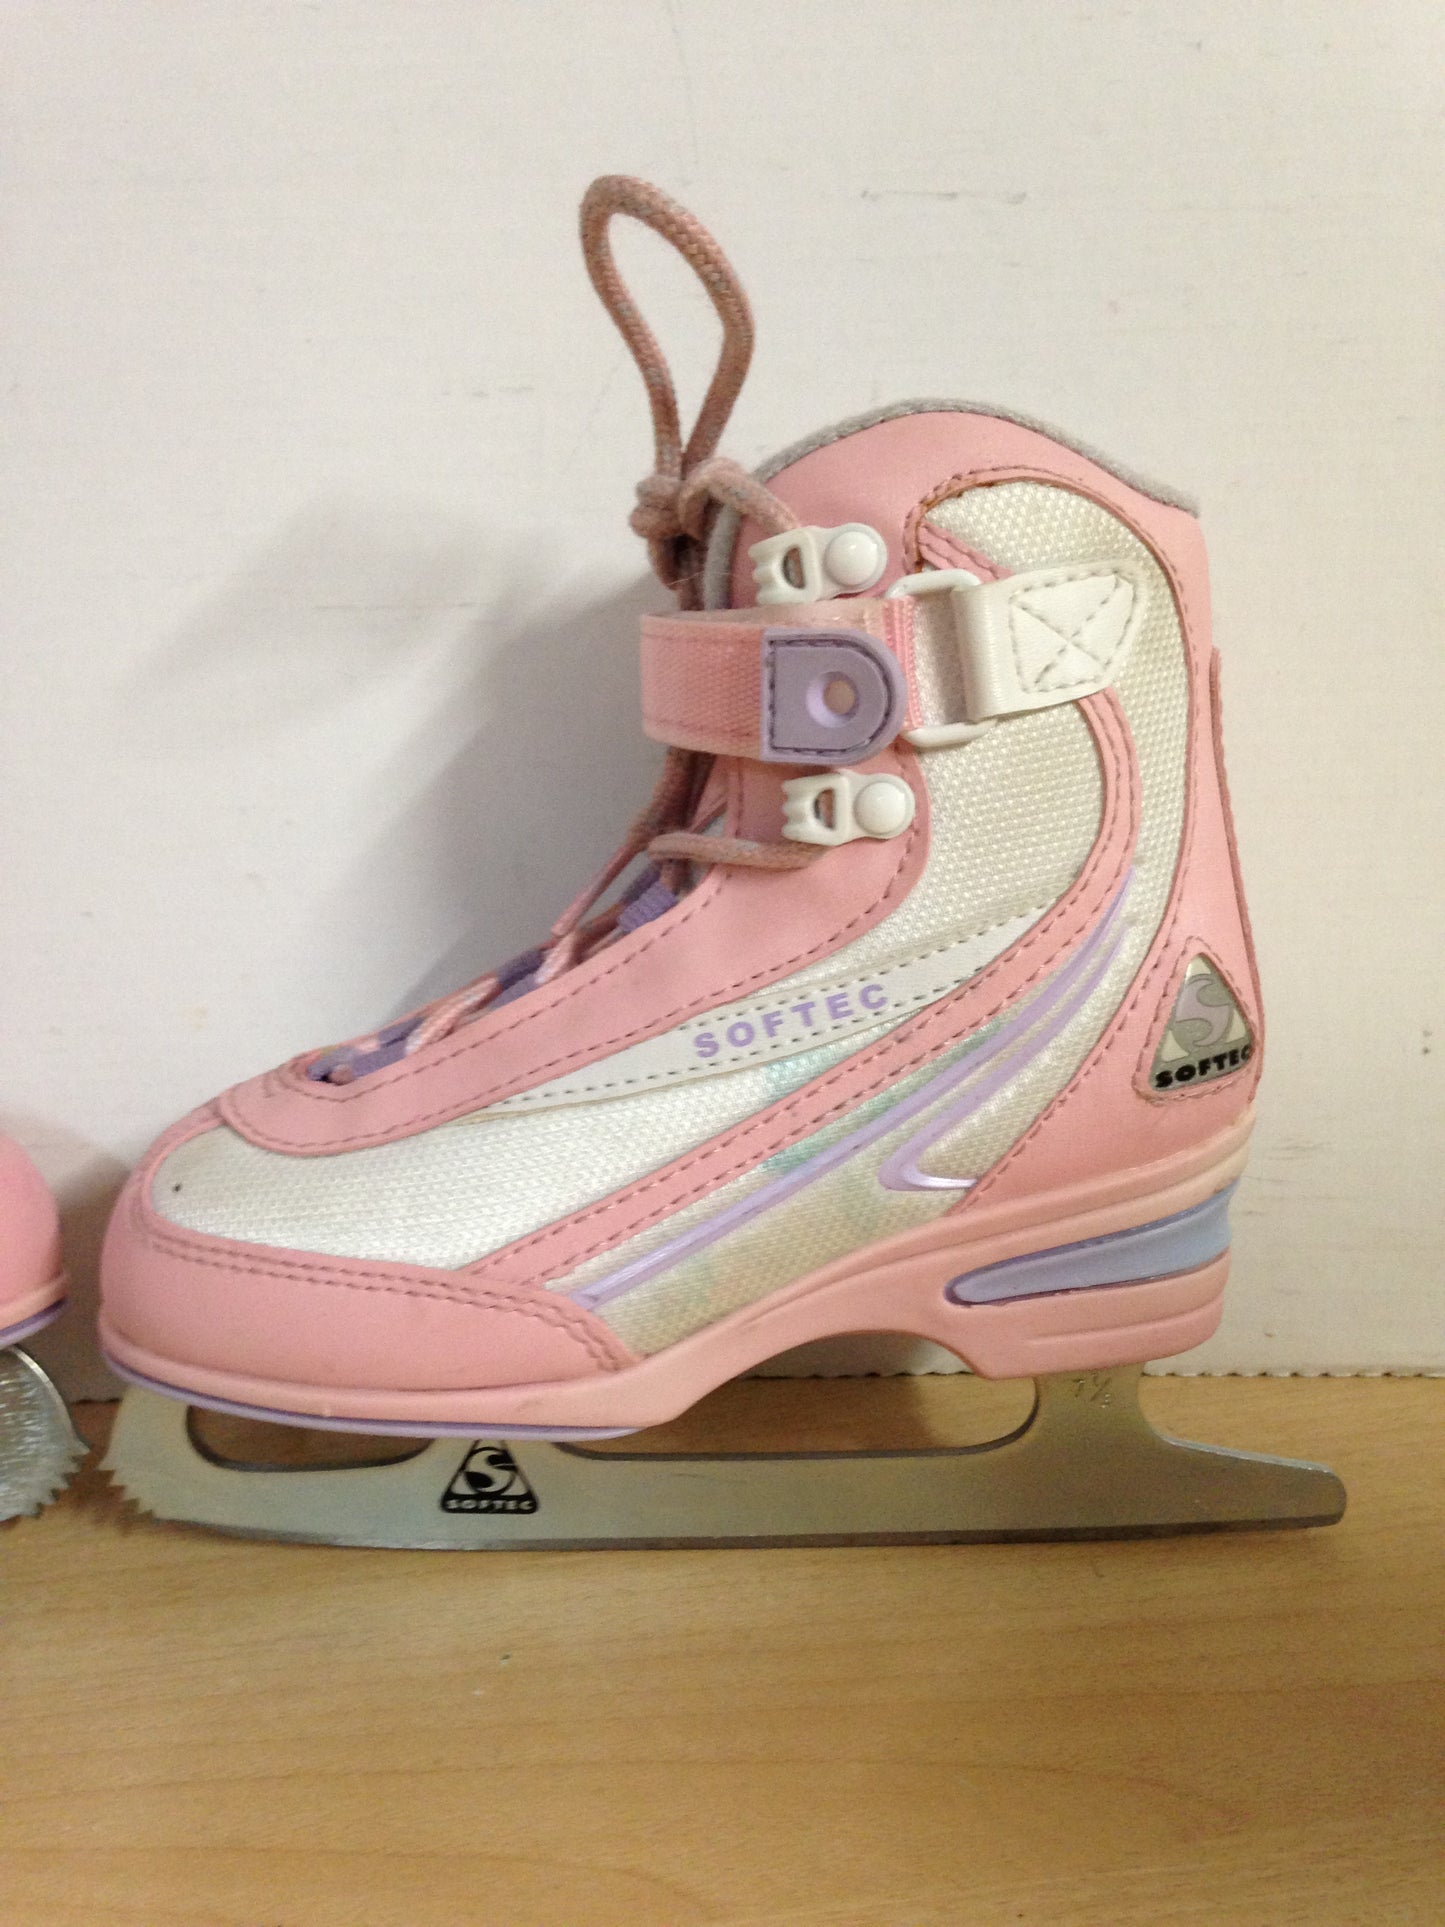 Figure Skates Child Size 13 Softec Soft Skates Pink White Excellent